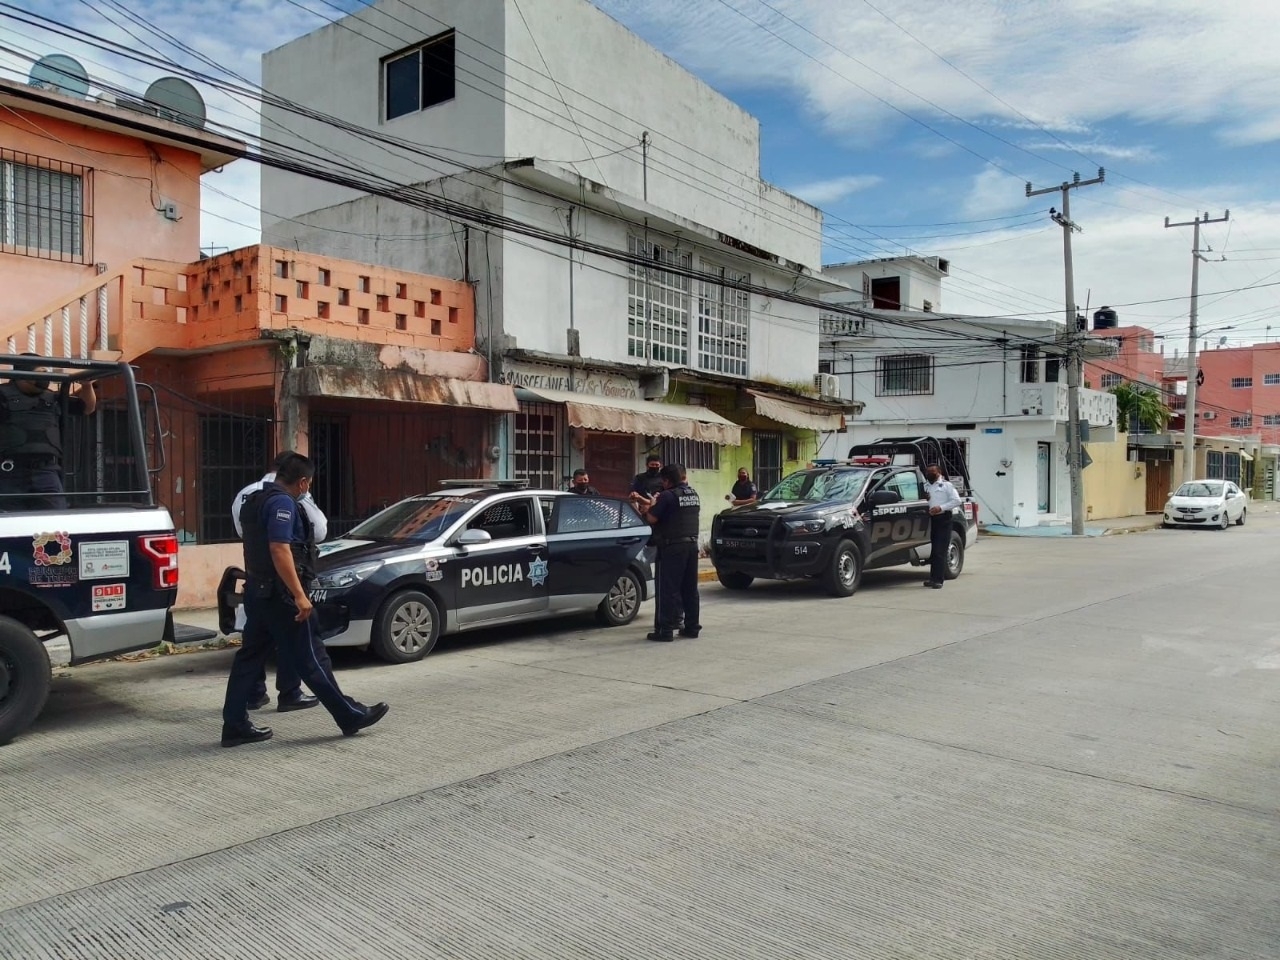 C5 Campeche recibió 265 mil llamadas falsas de emergencia durante 2021